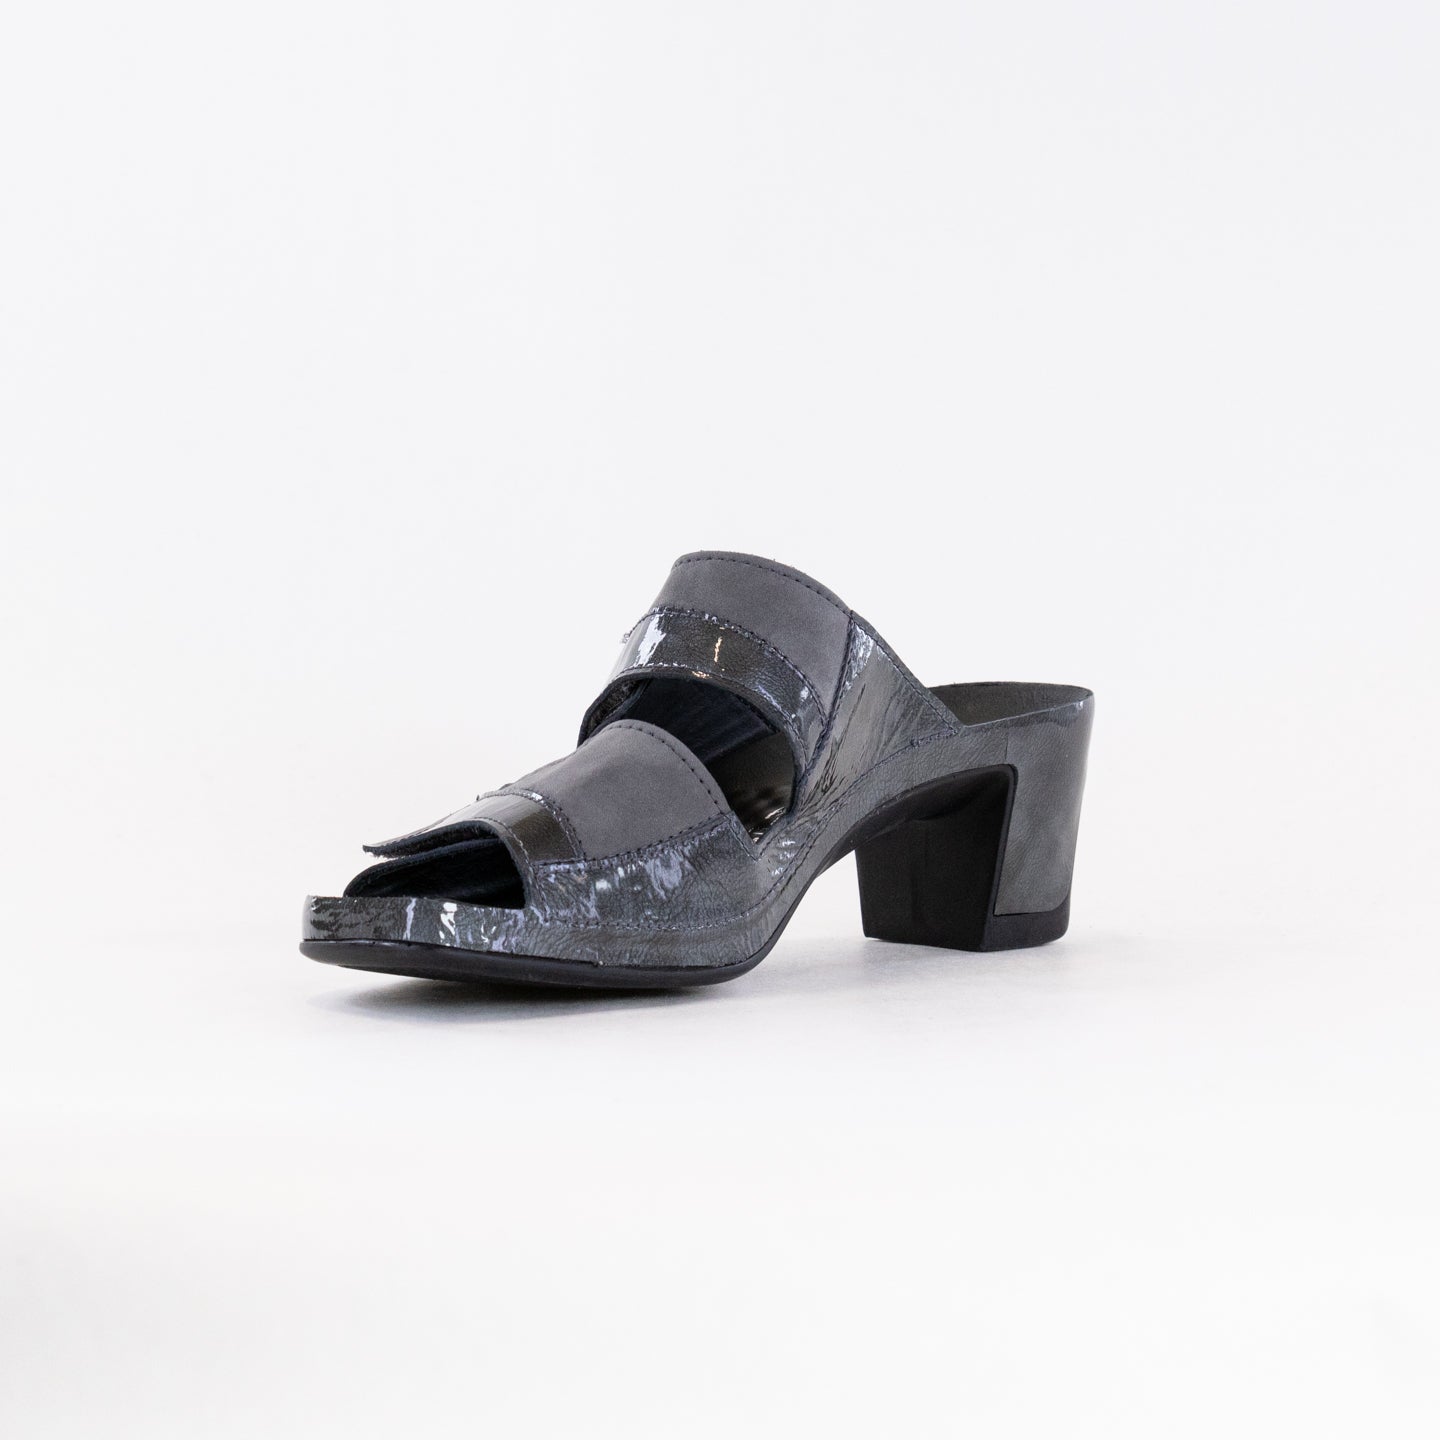 Vital Joy Mule Sandal (Women's) - Apache Grey Nubuck/Patent Leather